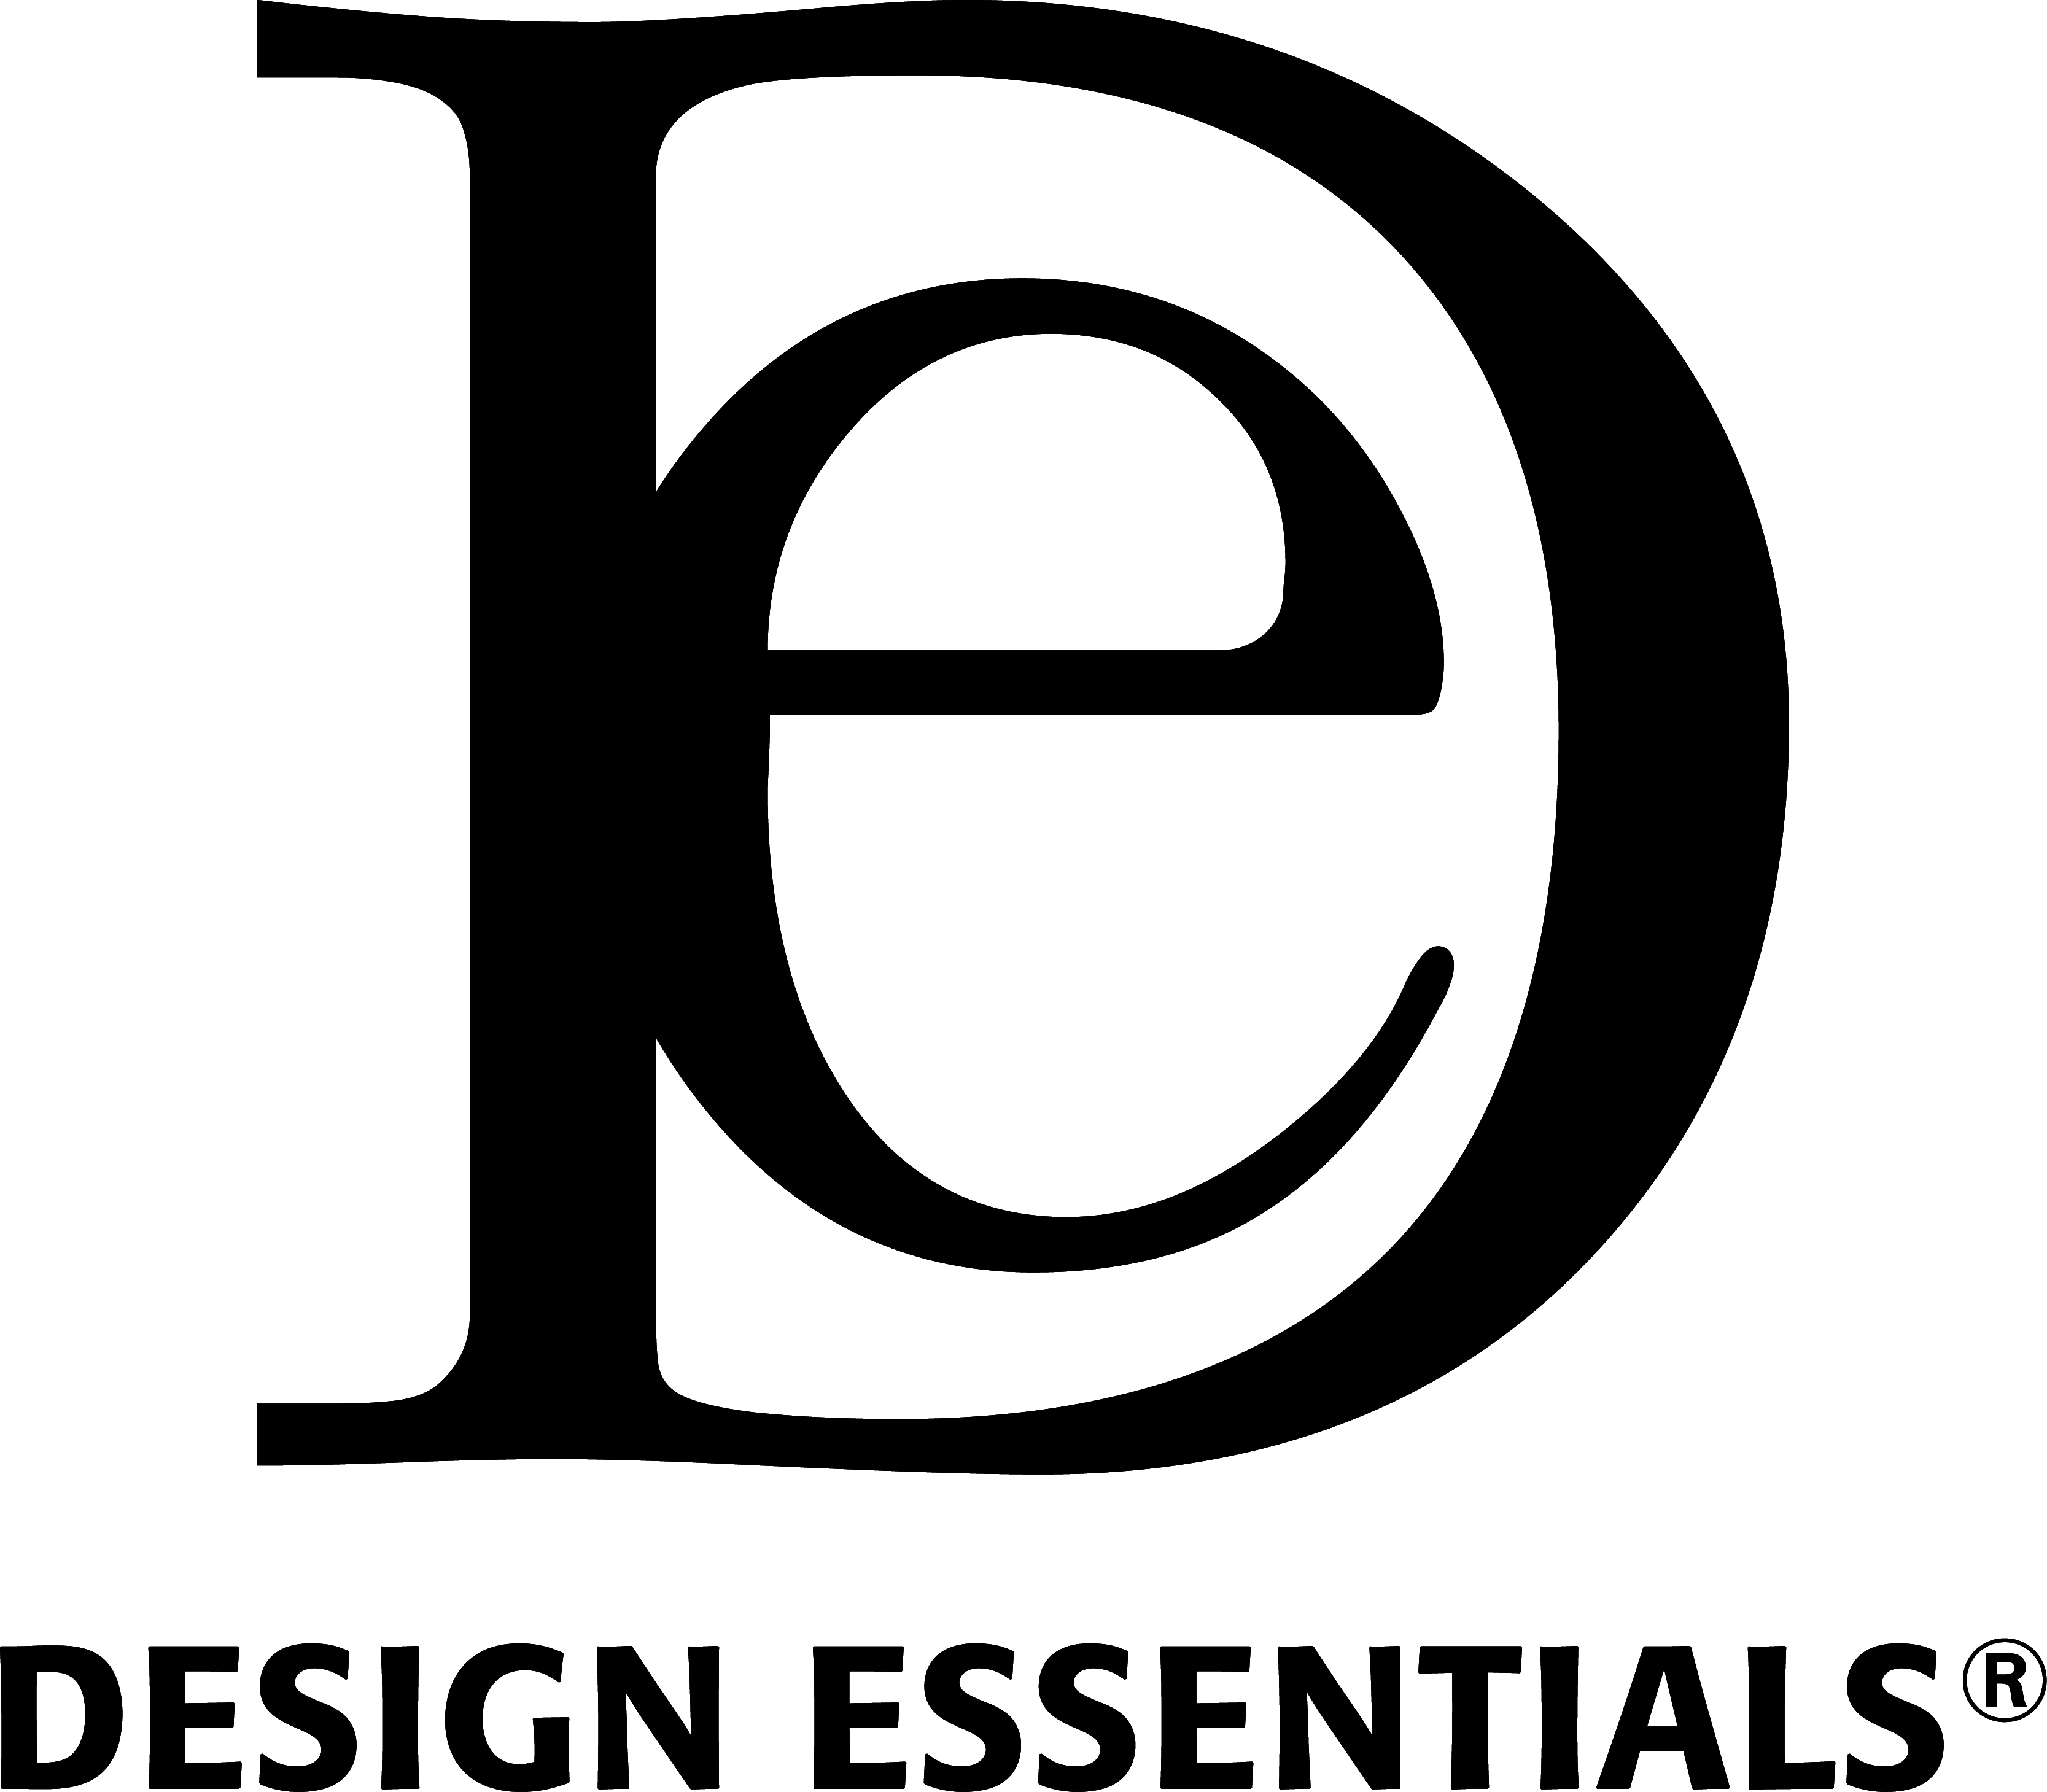 Design Essentials - The Shamila Experience at Studio 0912 Tresses, Montclair, theshamilaexperience.com 